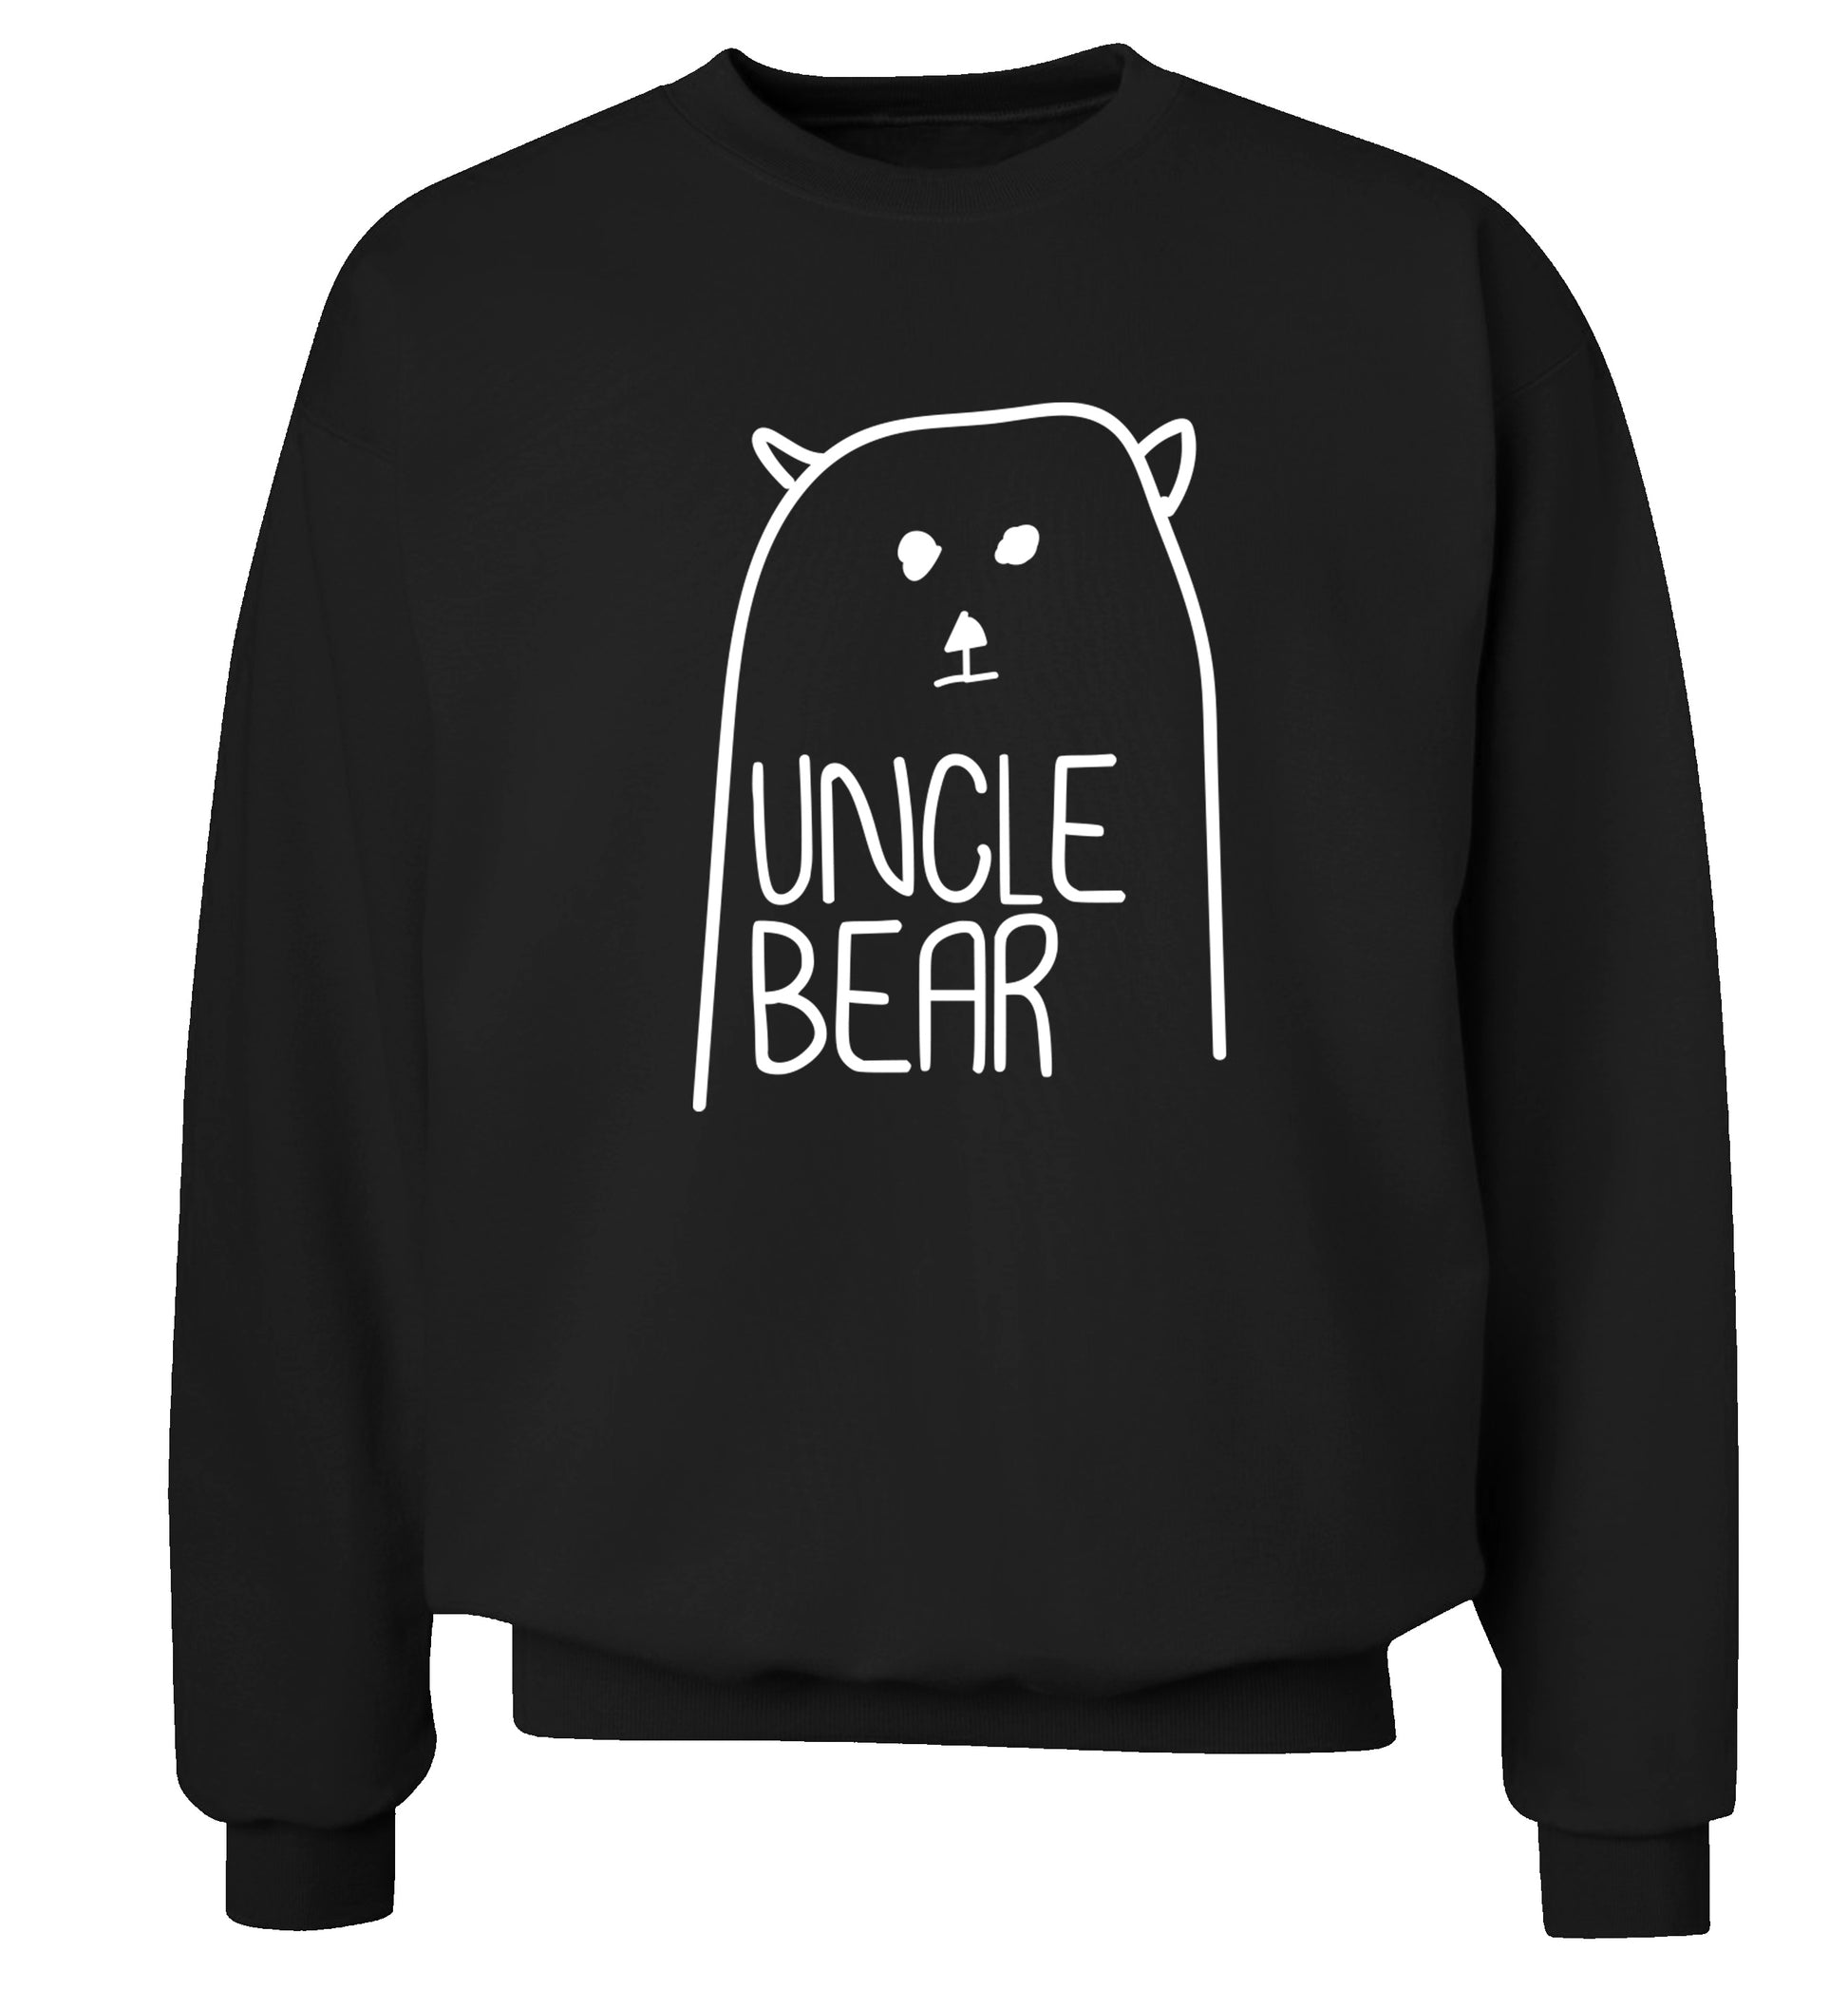 Uncle bear Adult's unisex black Sweater 2XL